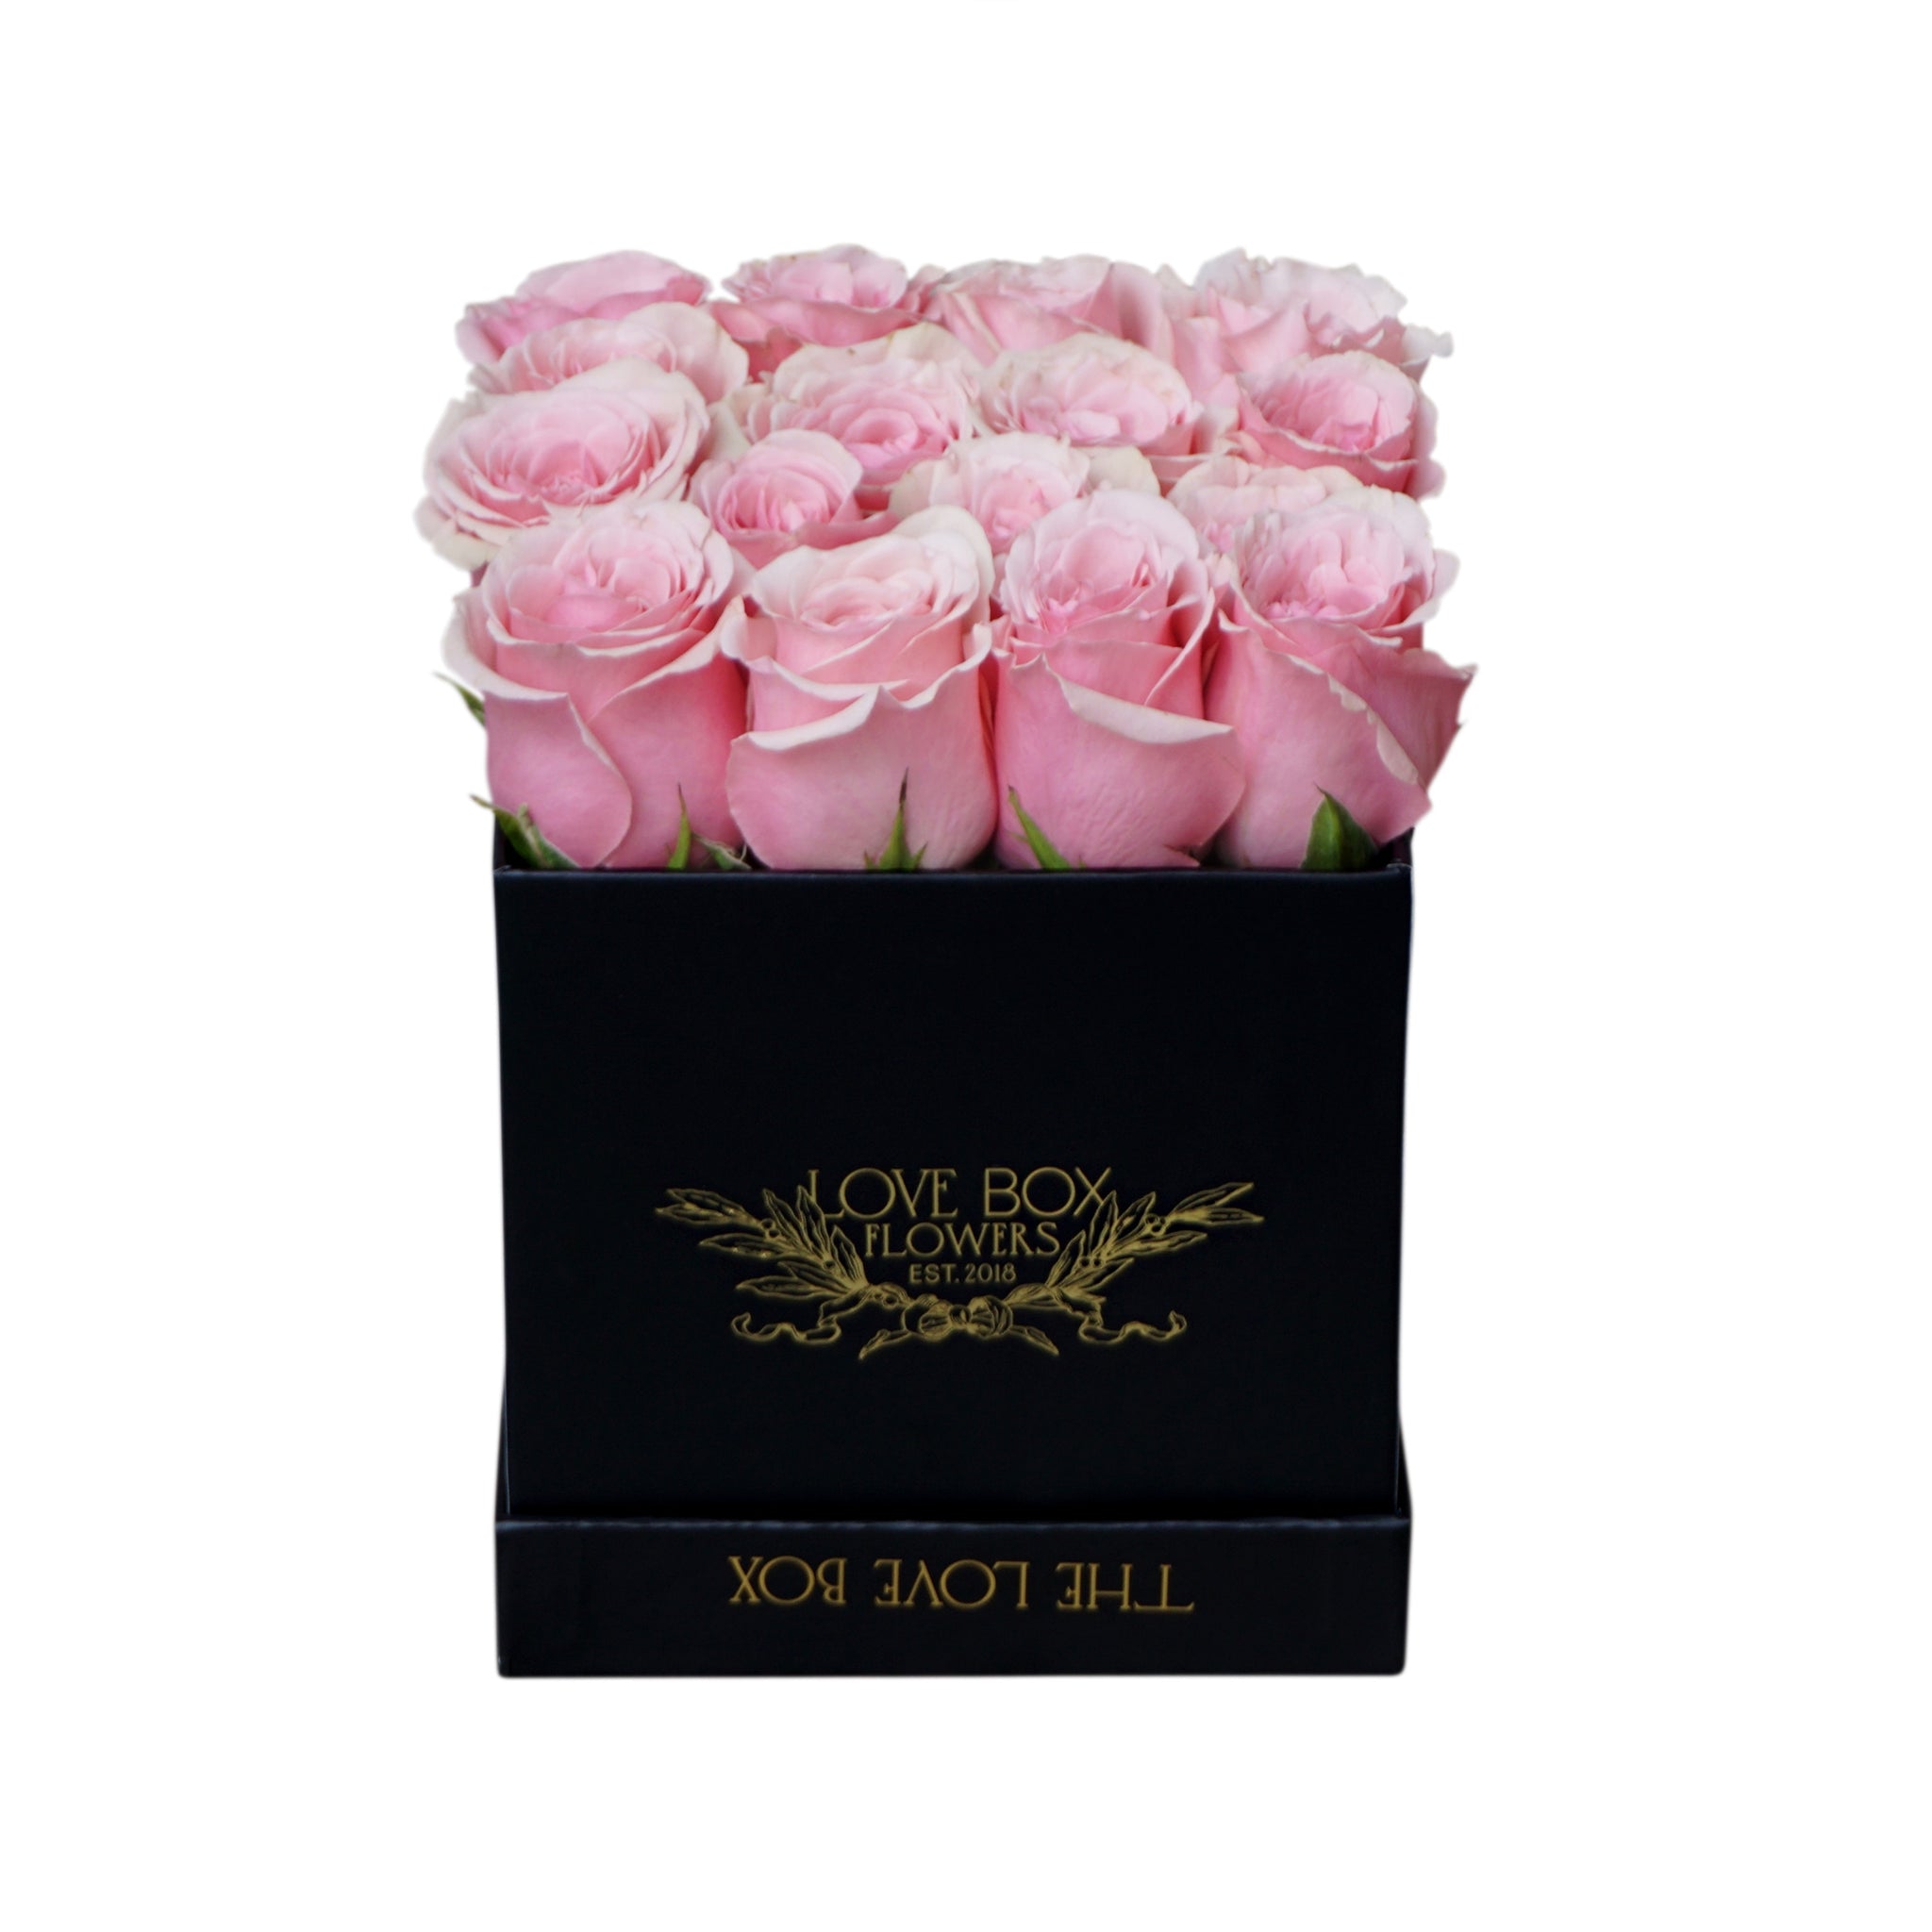 Baby Pink Roses in Medium Black Square Box